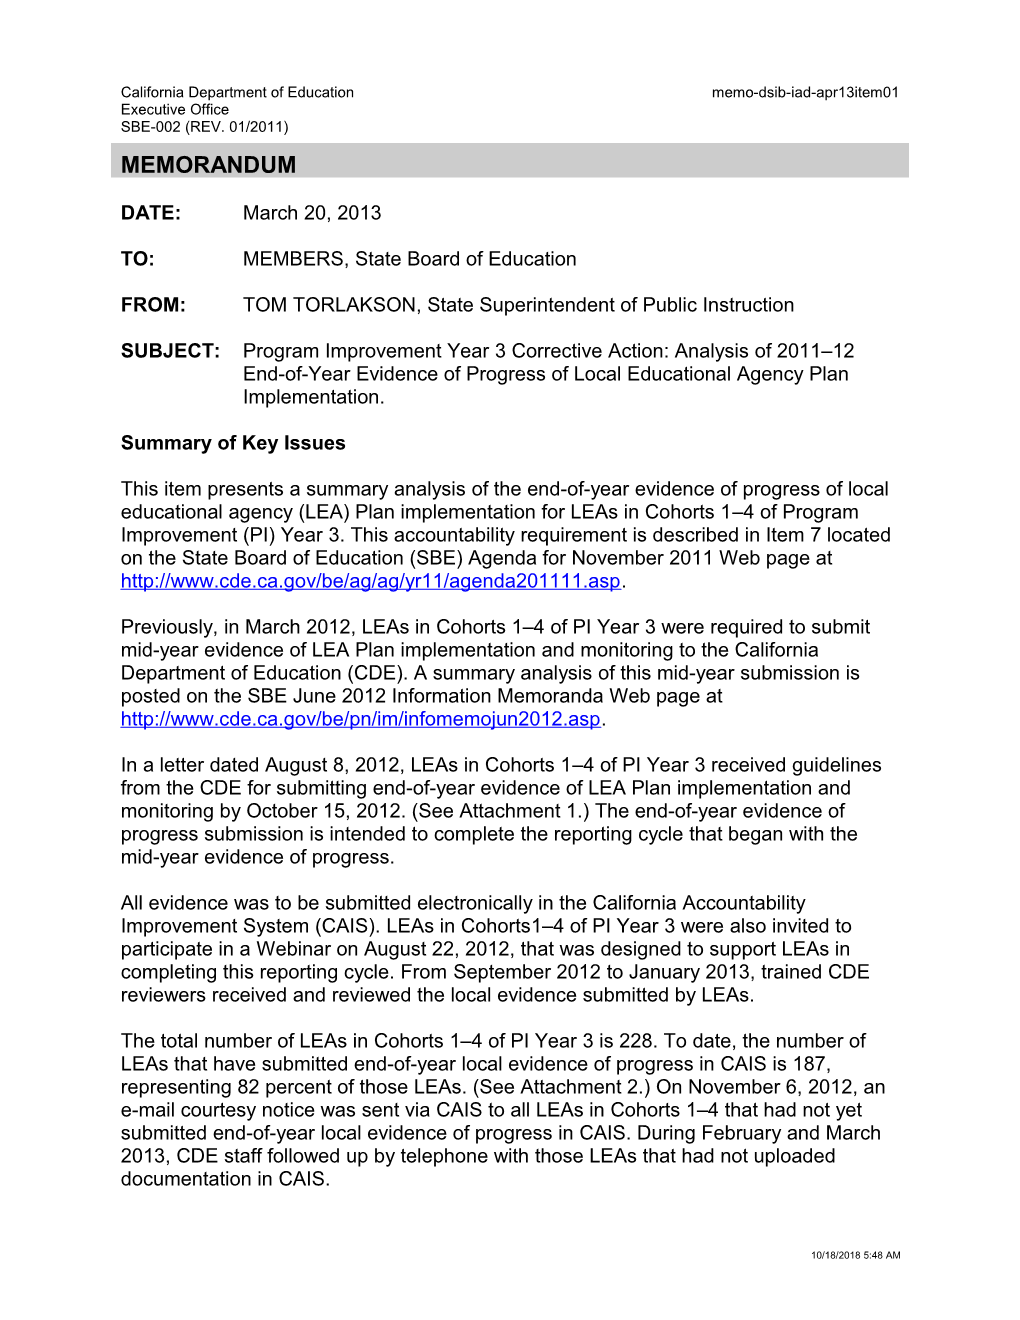 April 2013 IAD ITEM 1 - Information Memorandum (CA State Board of Education)